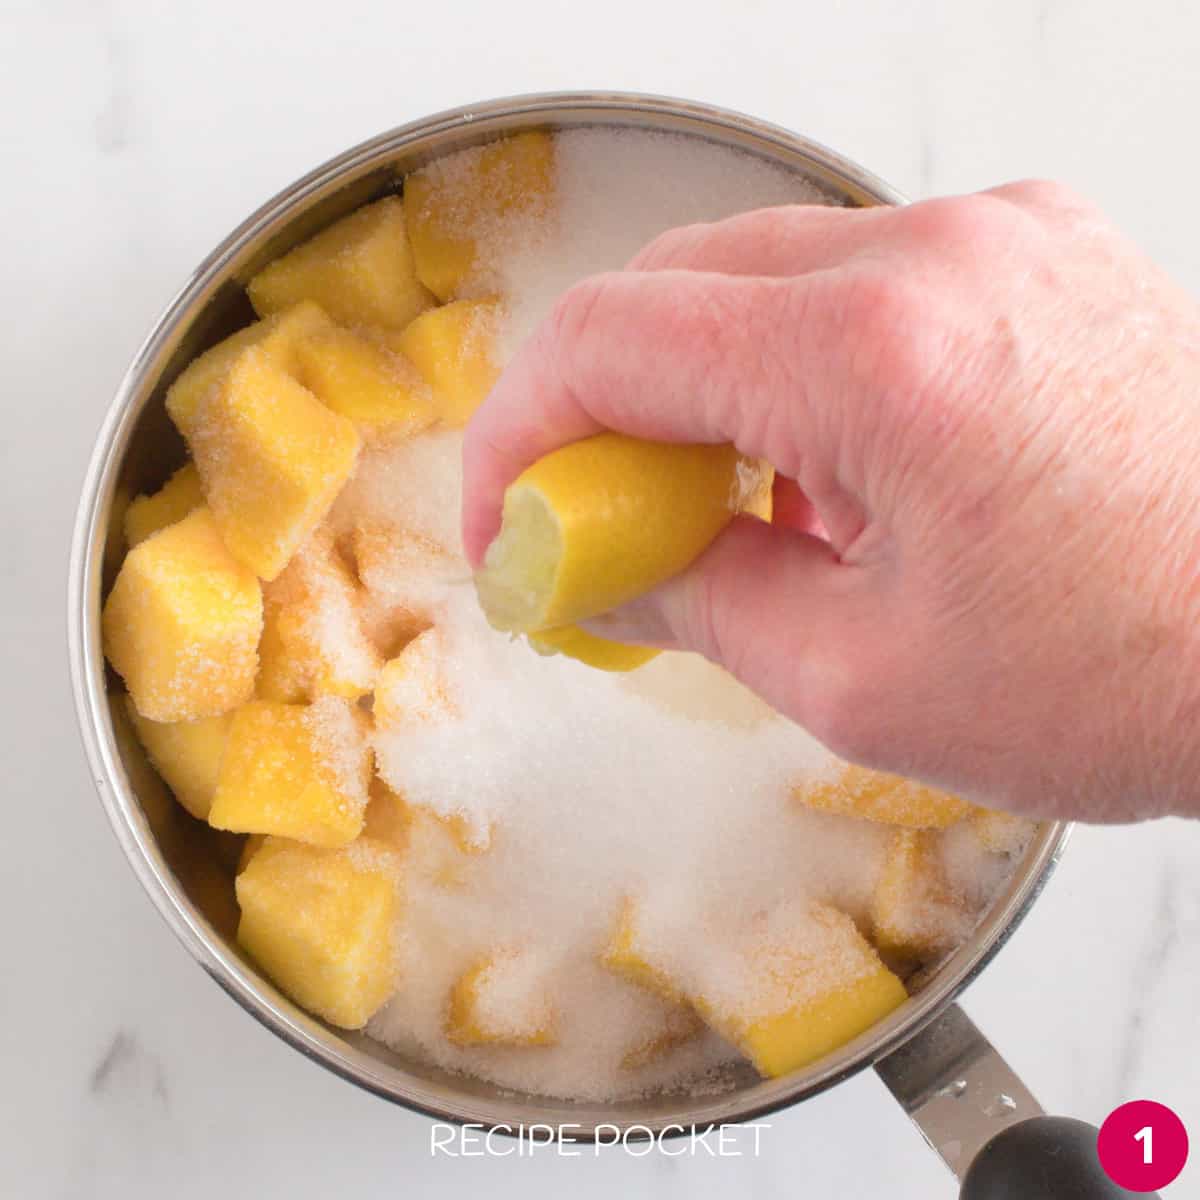 Mango pieces, sugar and lemon juice in a saucepan.